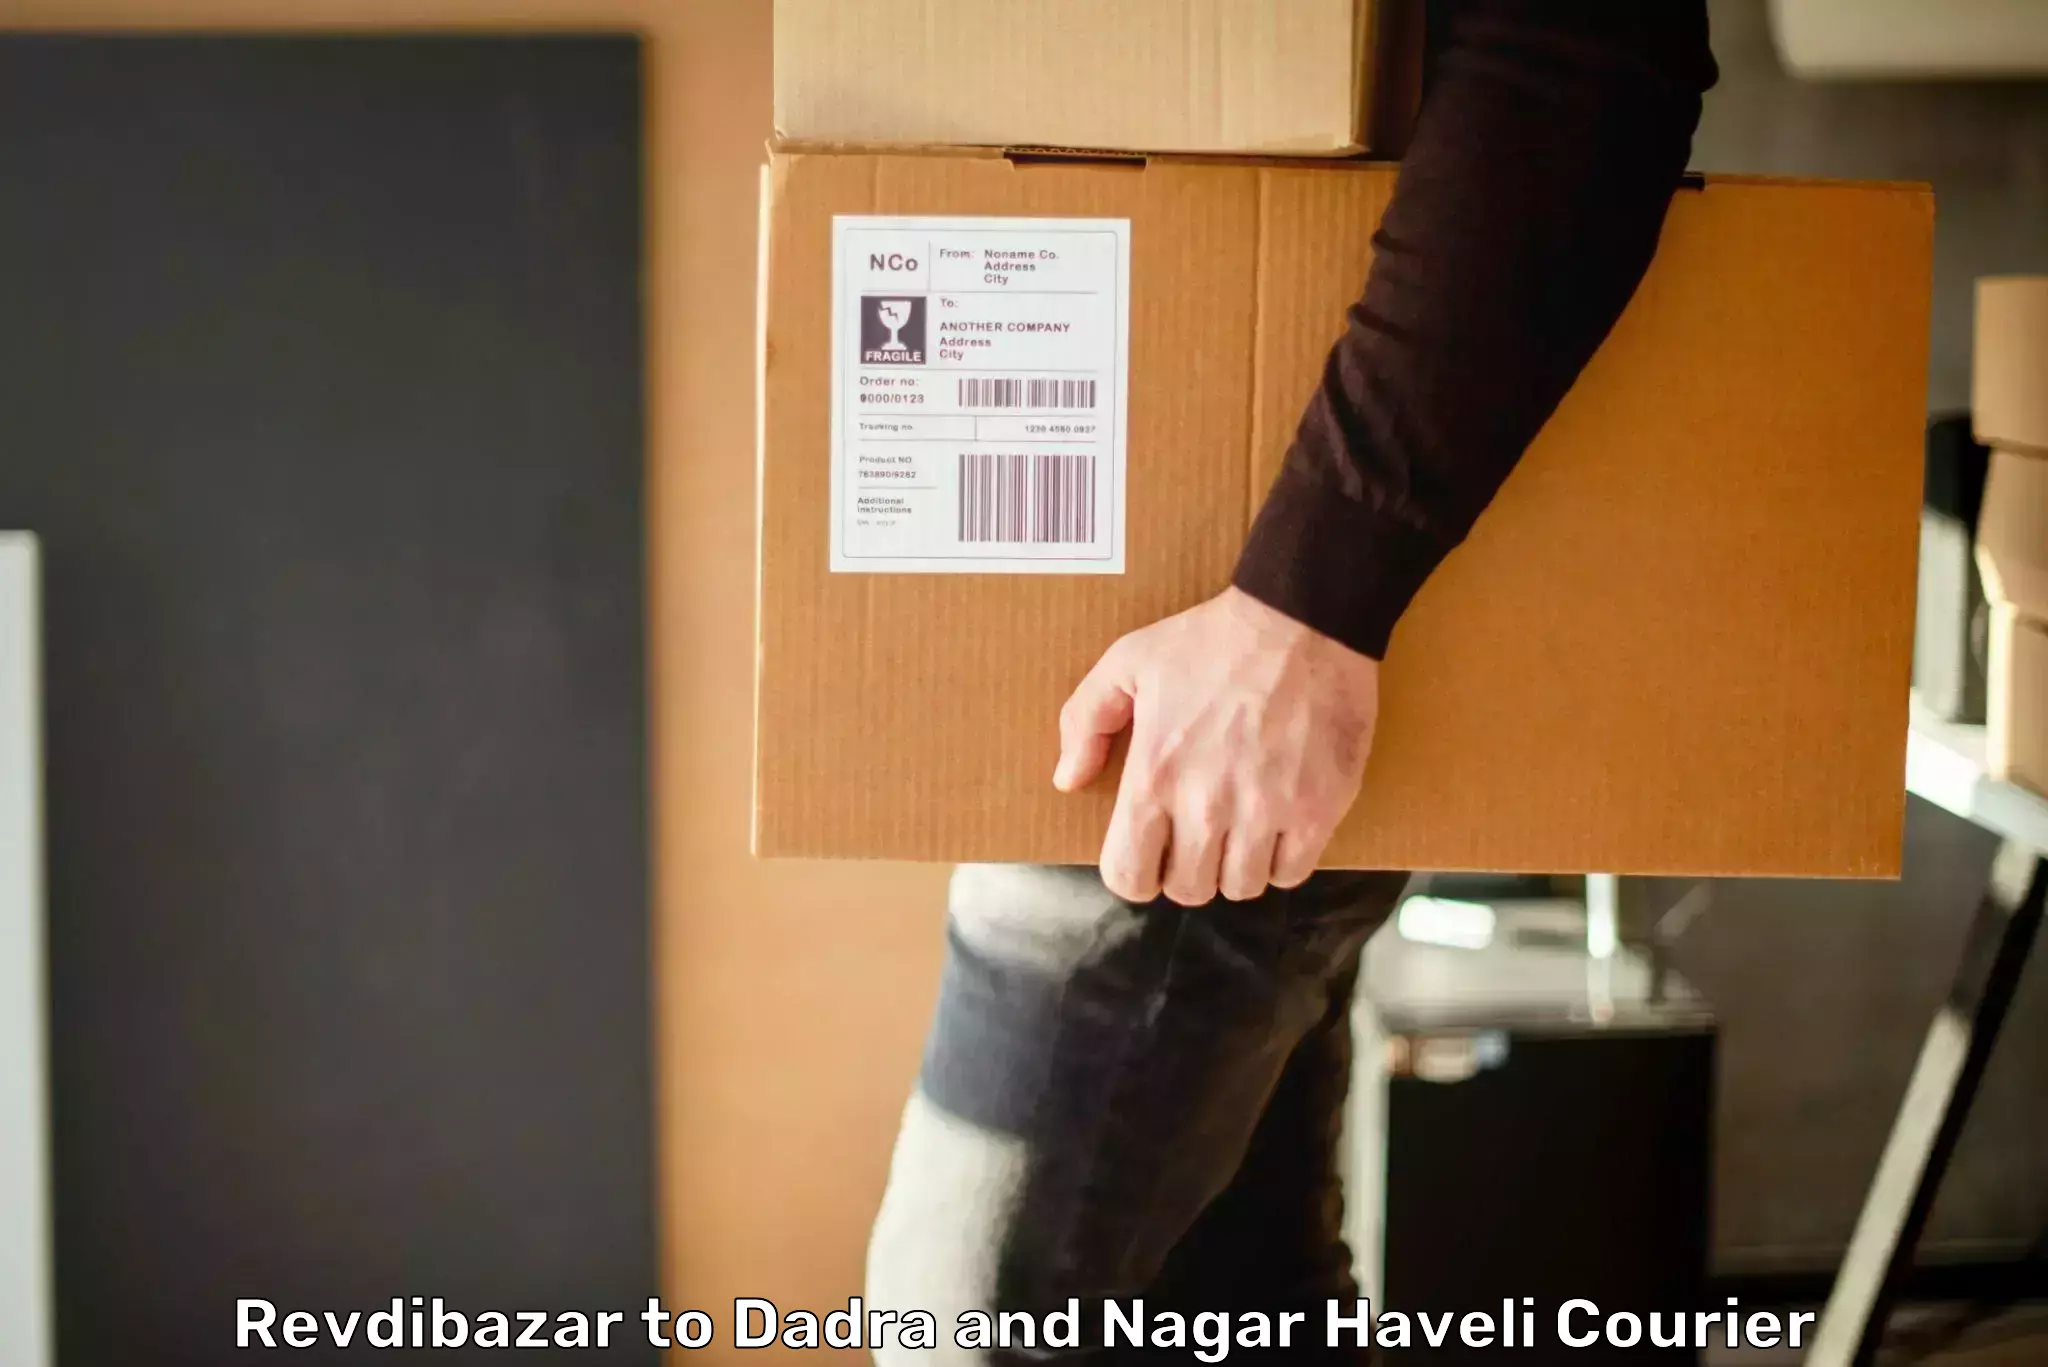 Professional parcel services Revdibazar to Dadra and Nagar Haveli